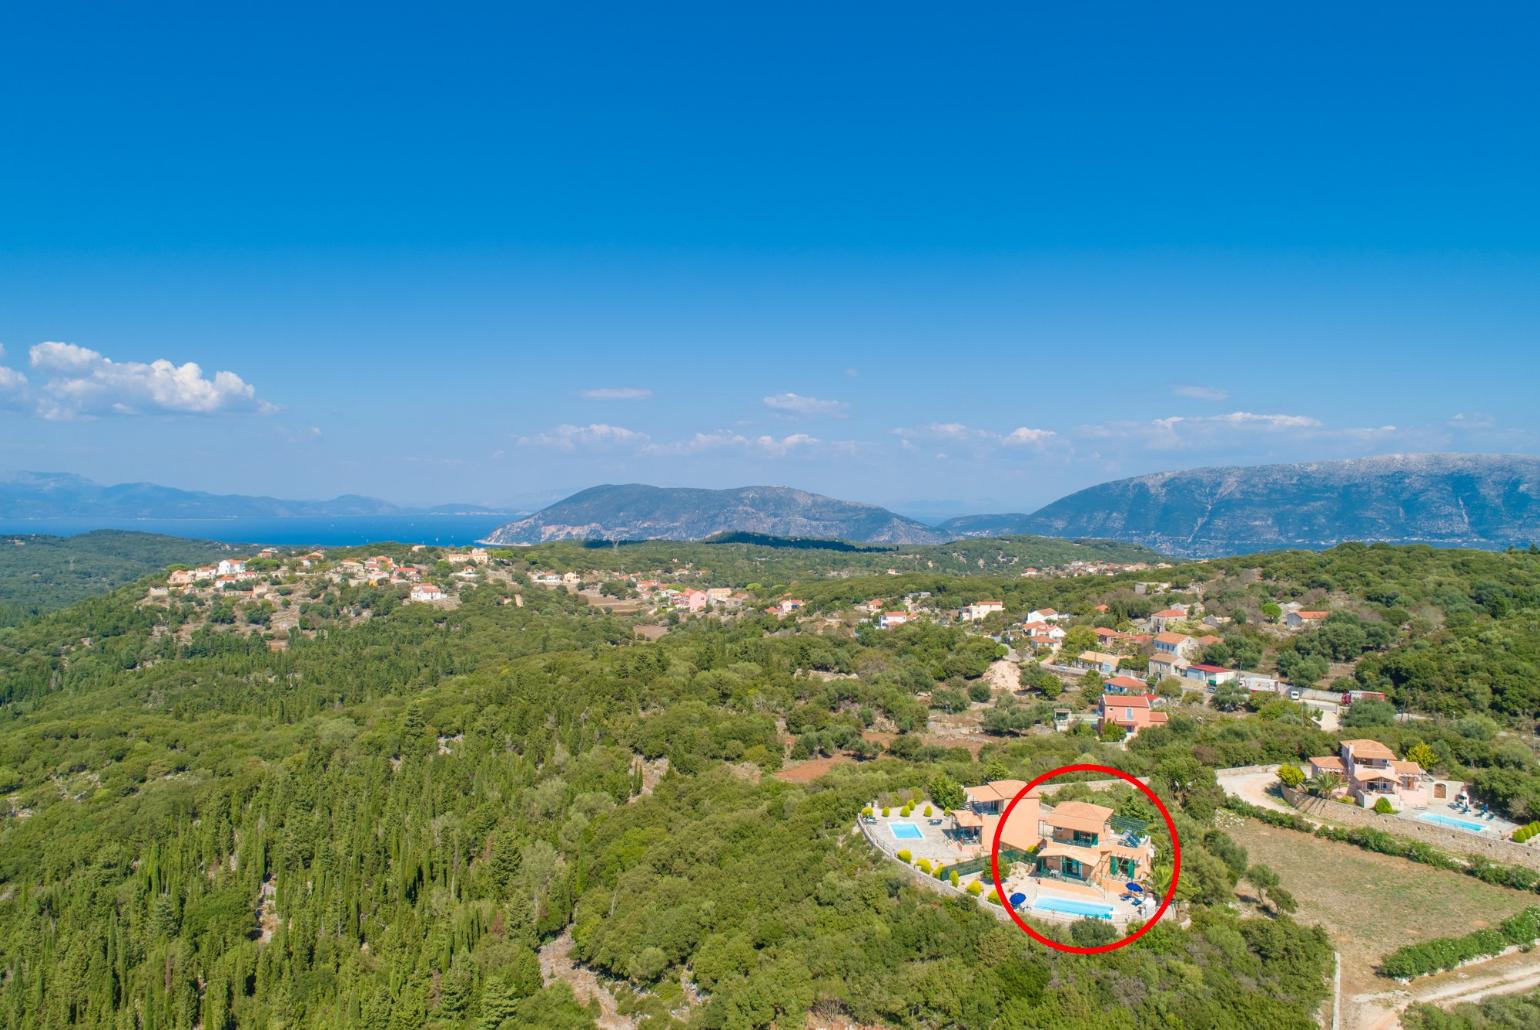 Aerial view showing location of Villa Vera